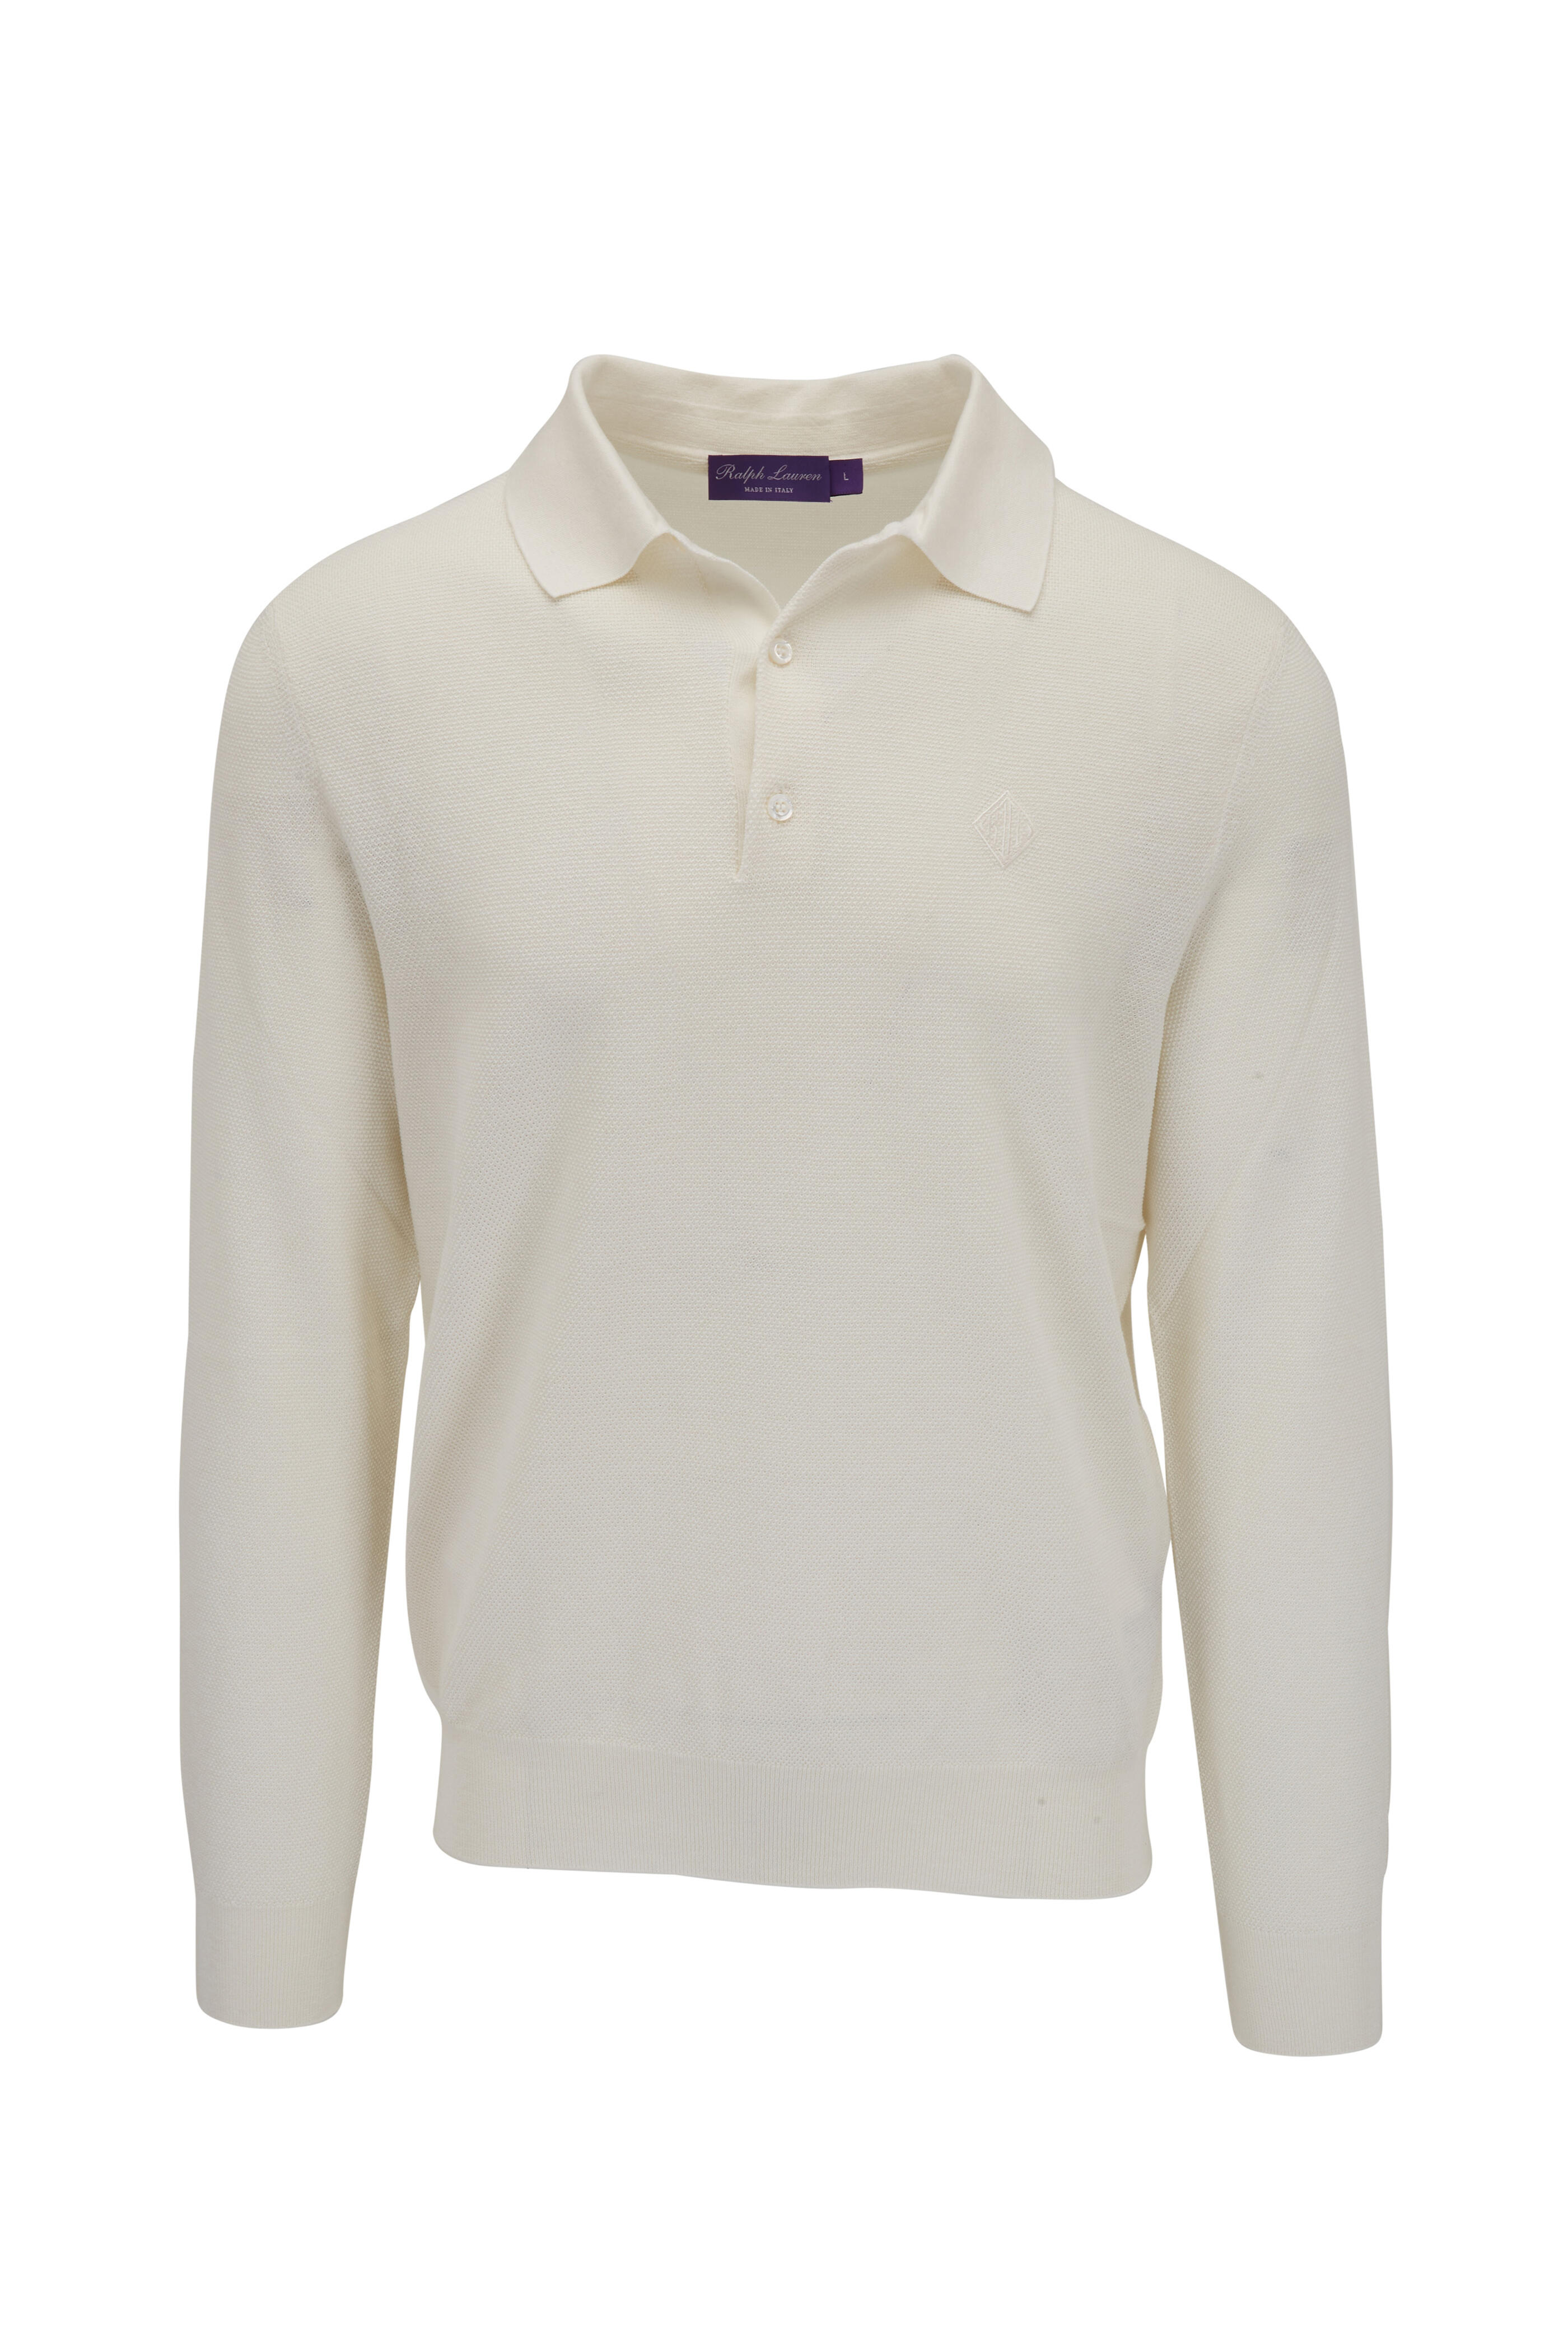 Ralph Lauren Purple Label - Cream Monogram Silk Blend Polo Sweater